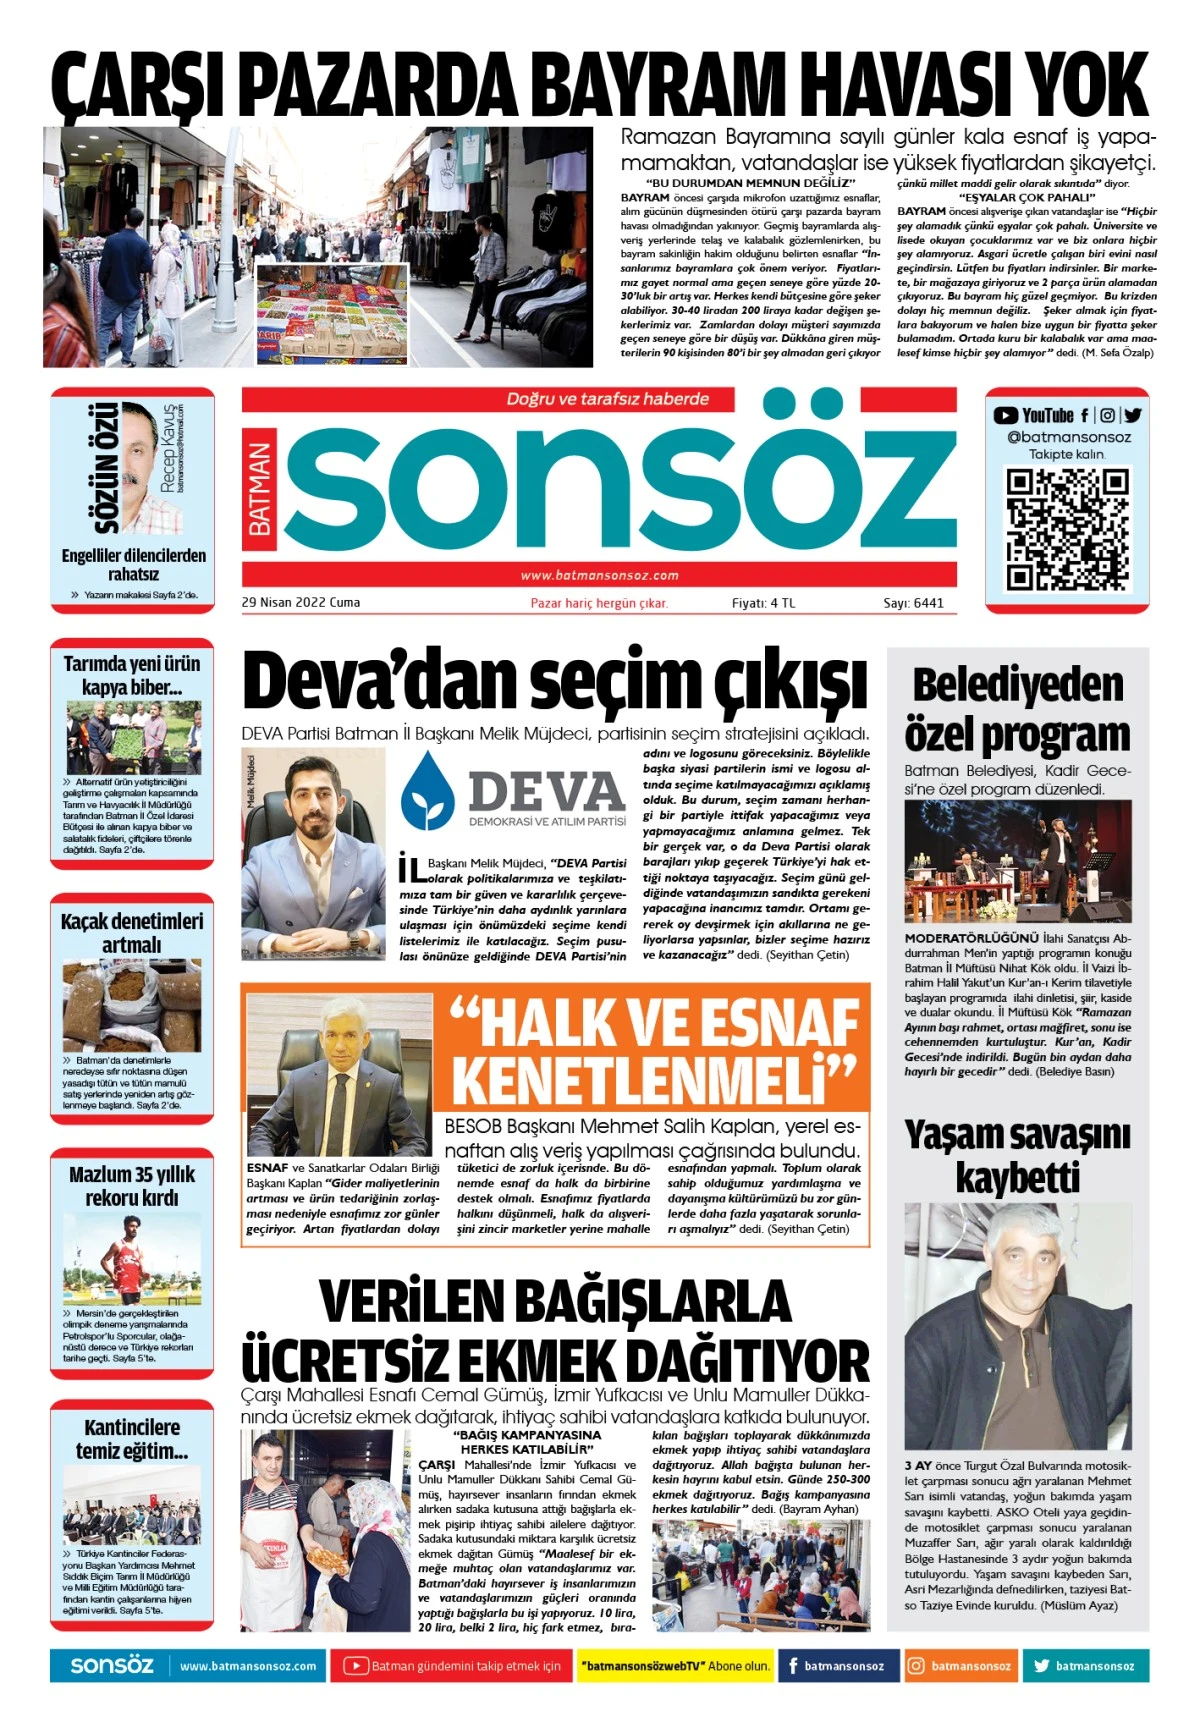 29 Nisan 2022 E-gazete